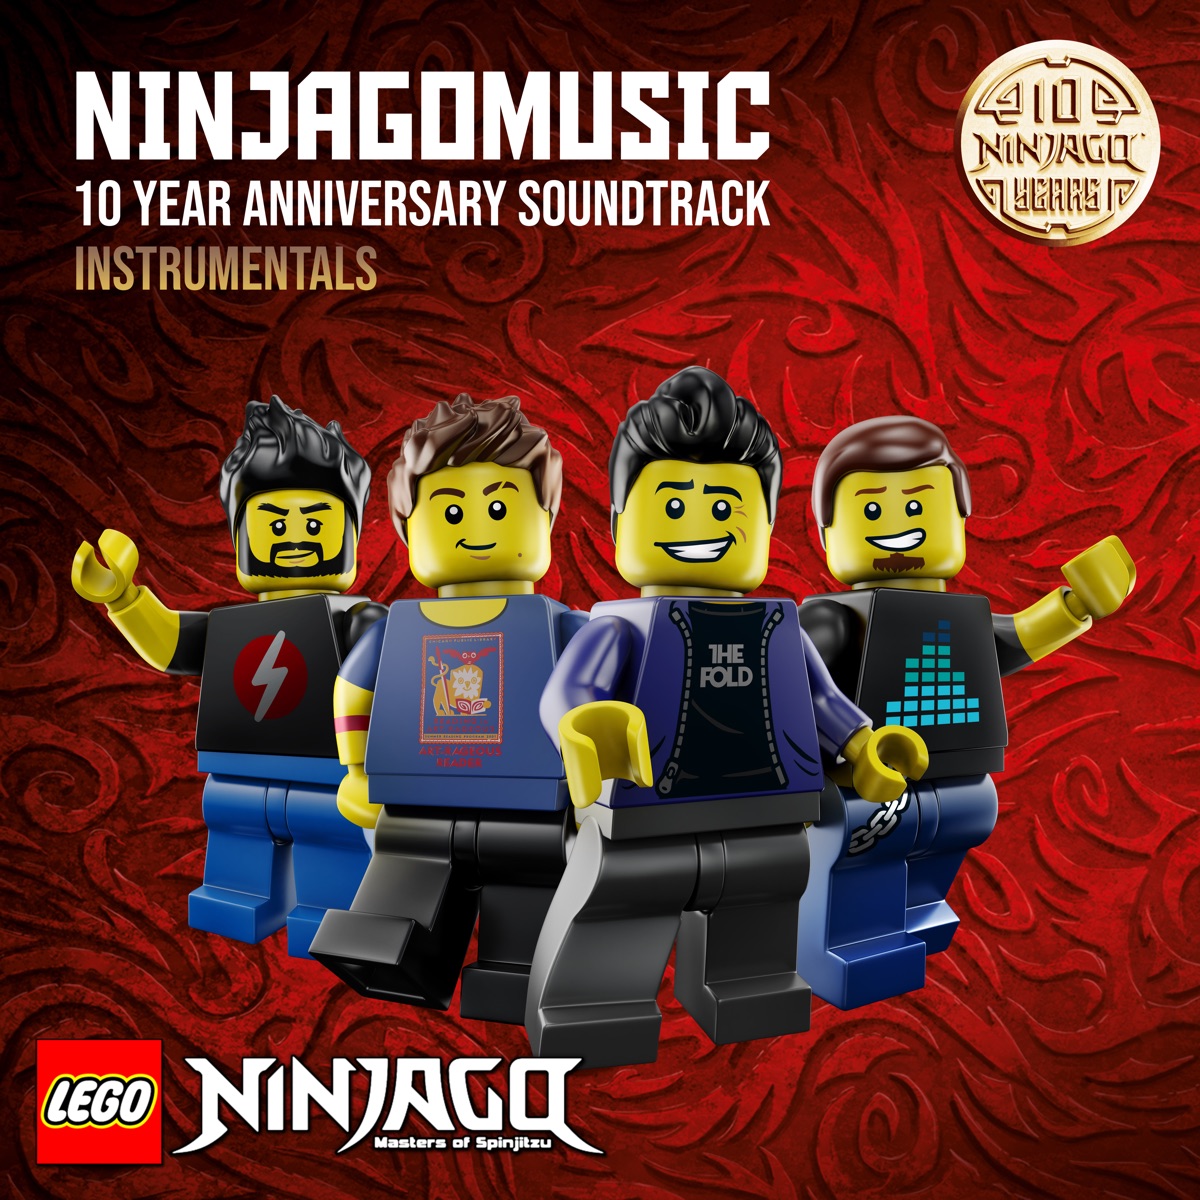 Lego Ninjago: For the Spinners by Ninjago Music & The Fold on Apple Music